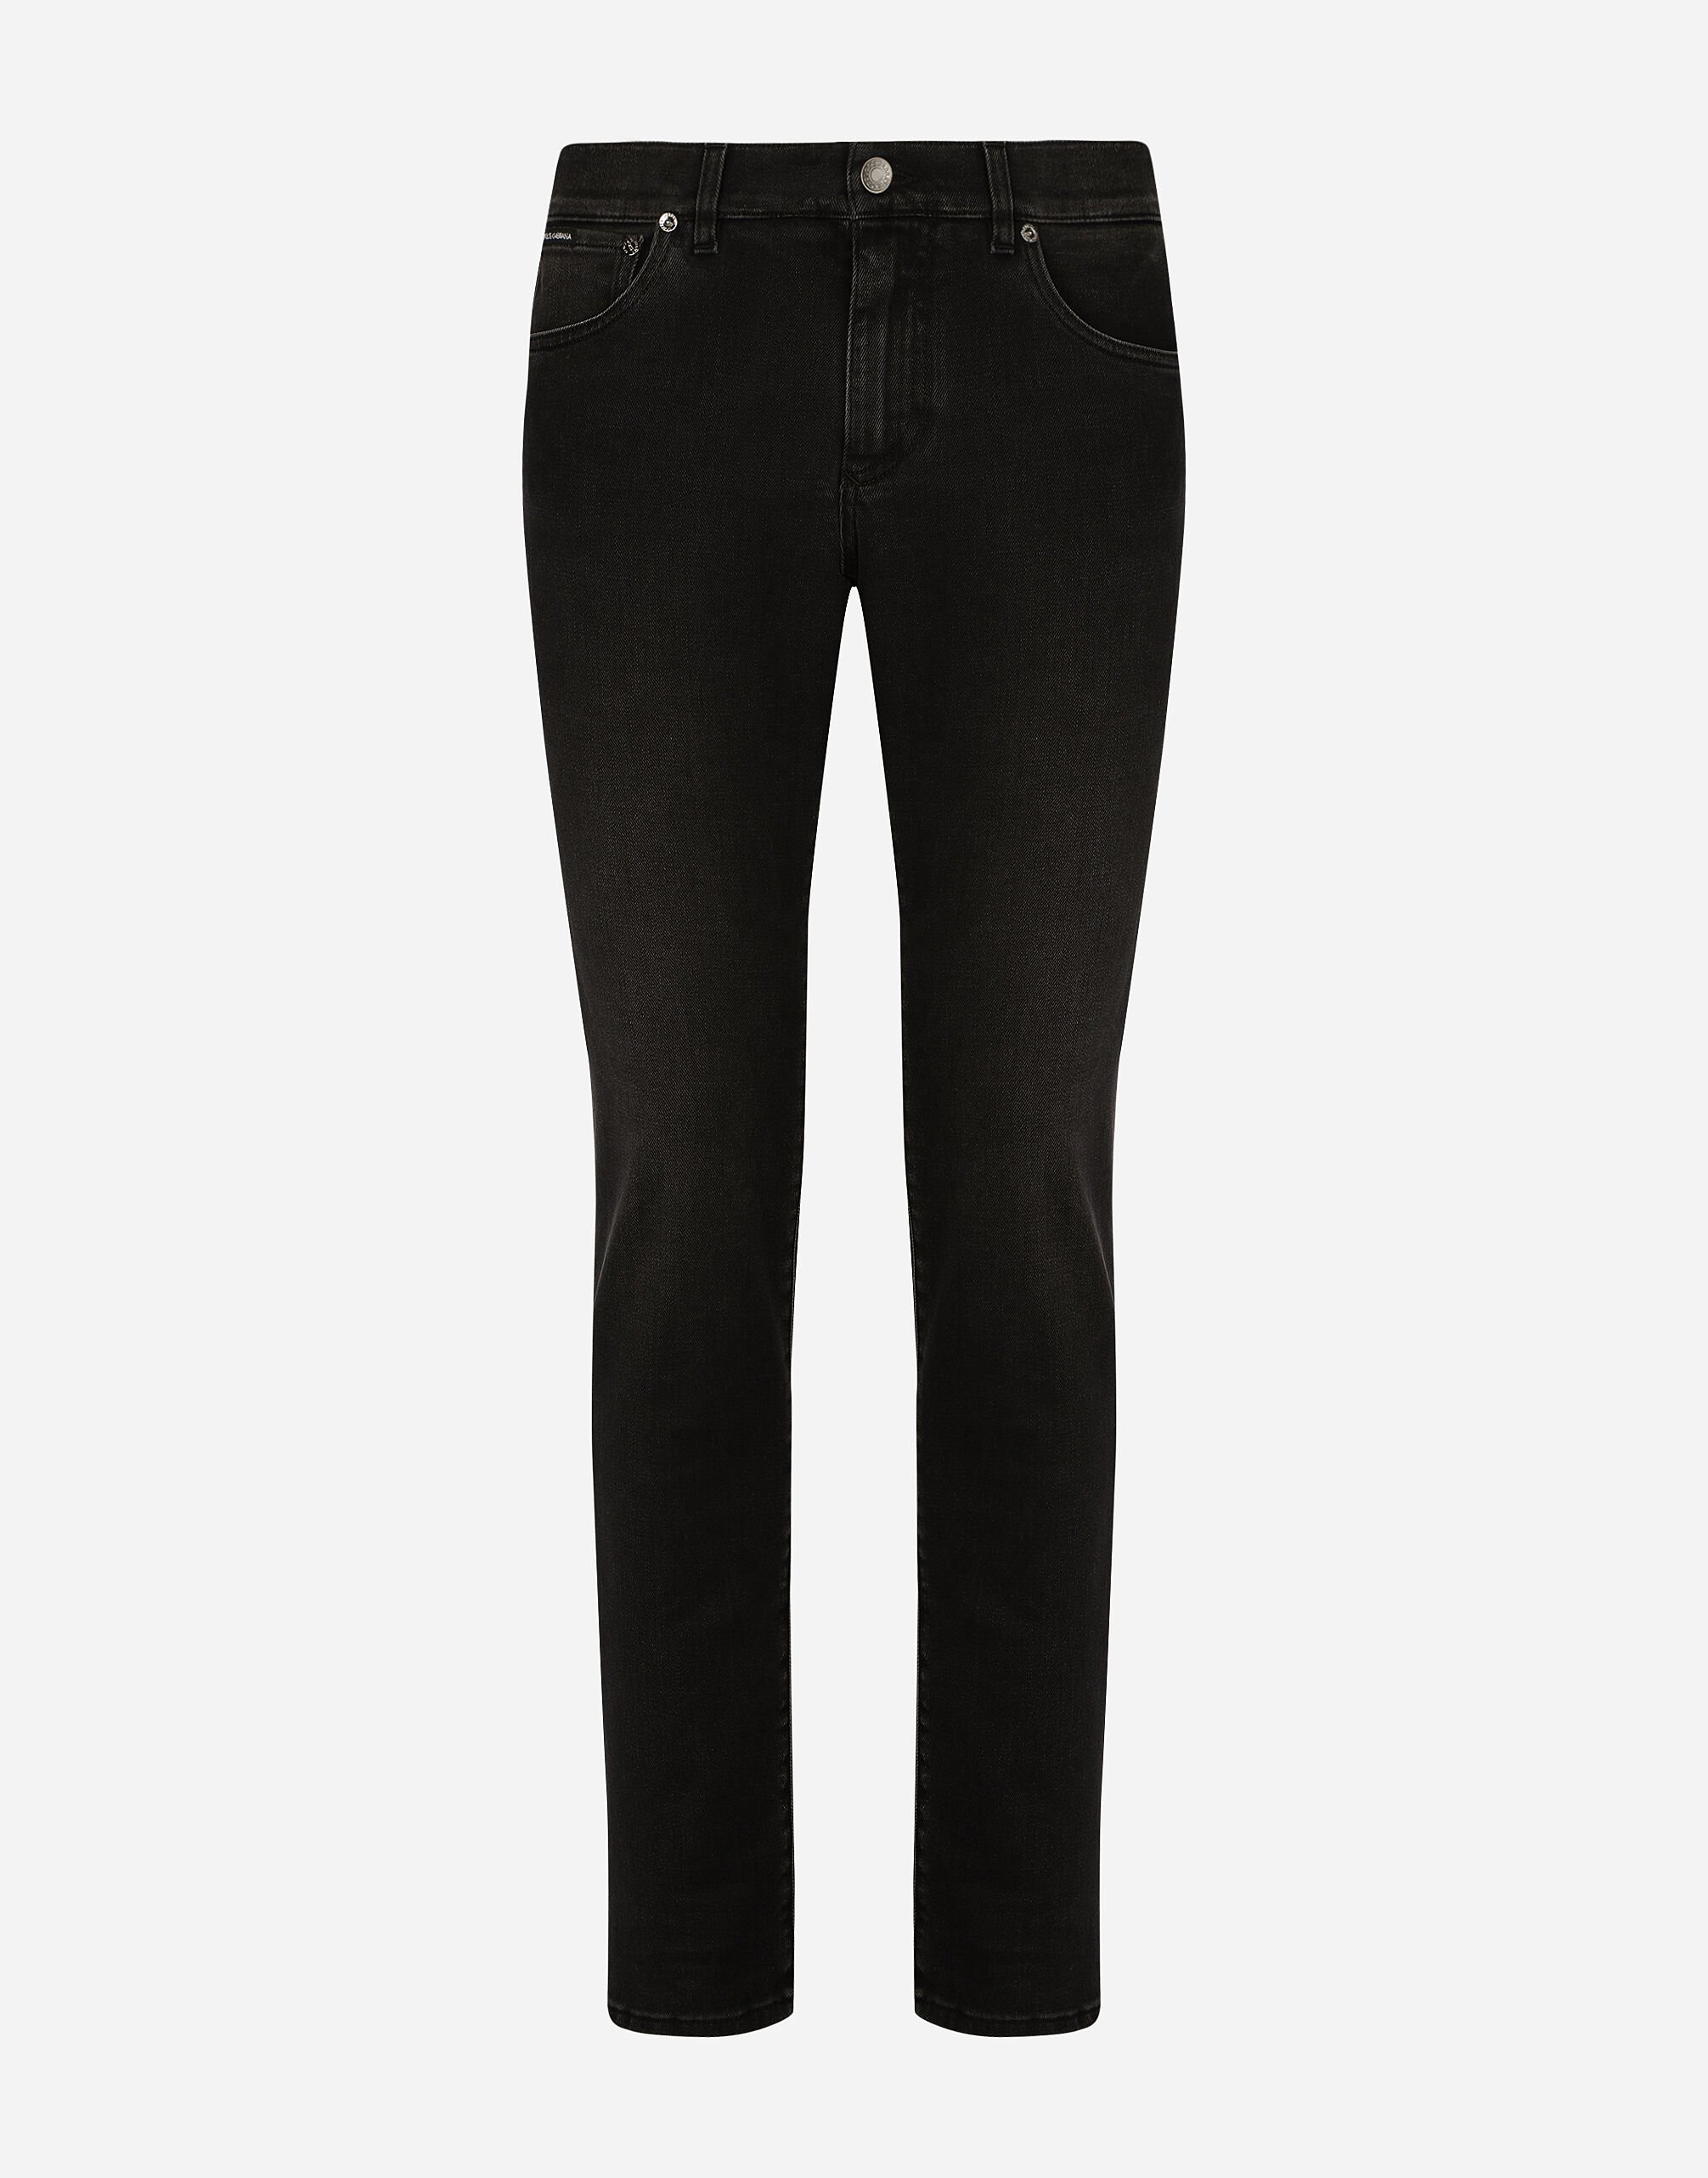 Dolce & Gabbana Jeans Slim Stretch grau gewaschen Mehrfarbig G5JC8DG8GW6